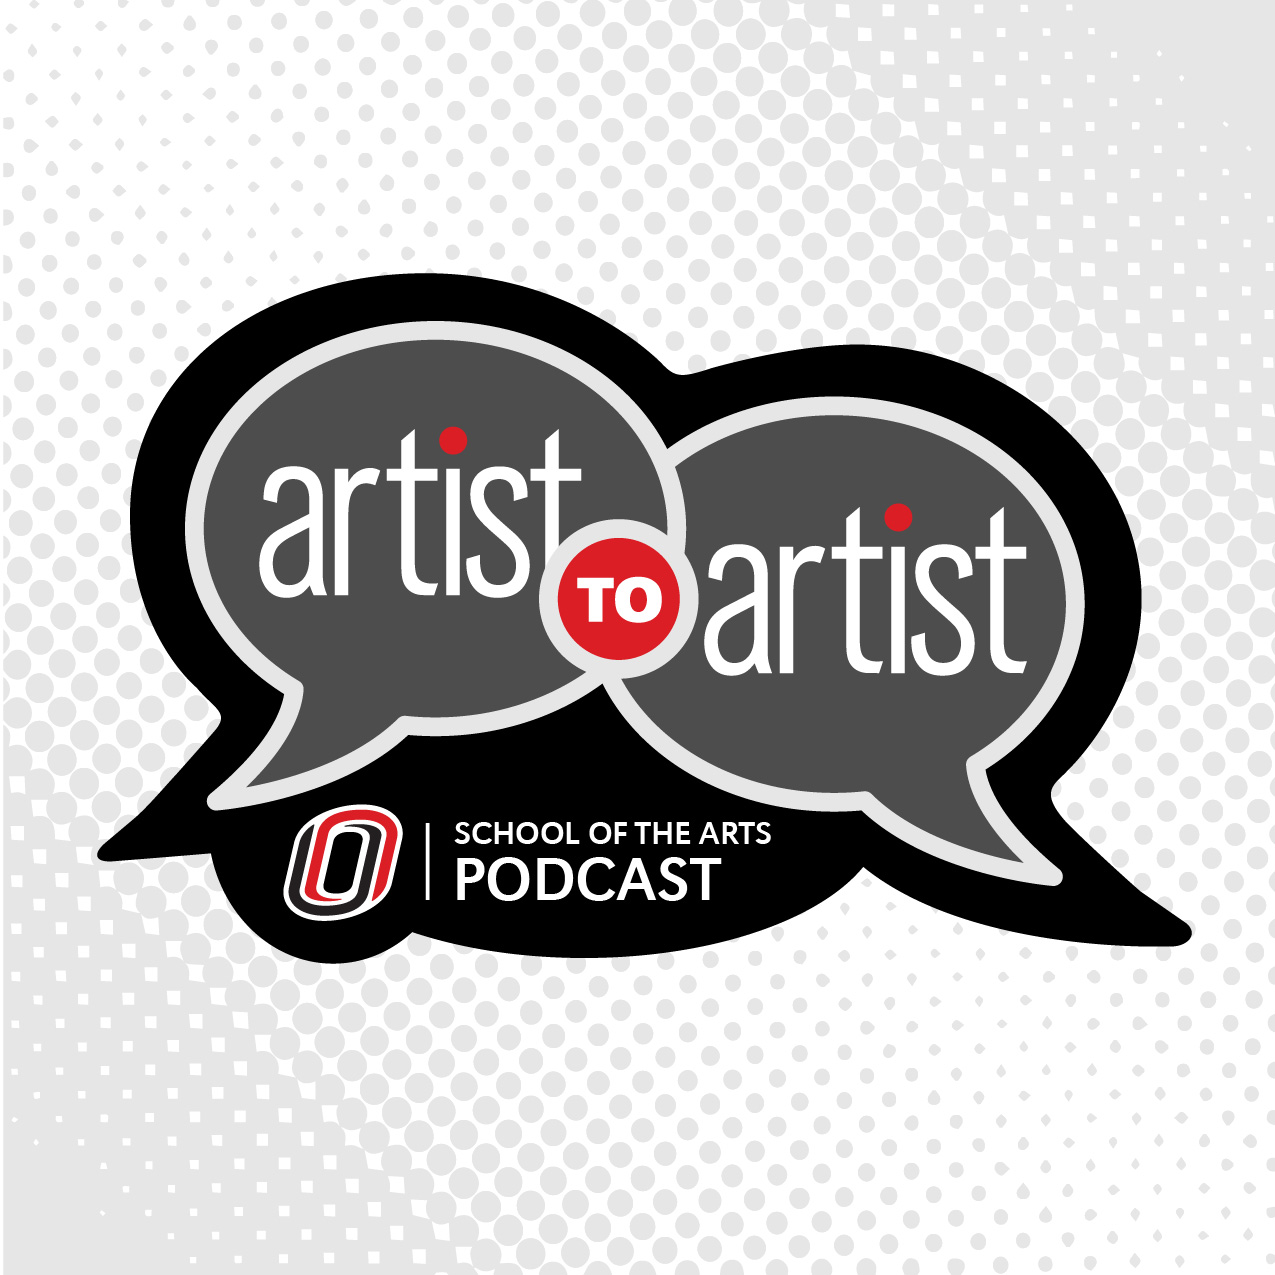 artist-to-artist-podcast-logo-612x612.jpg